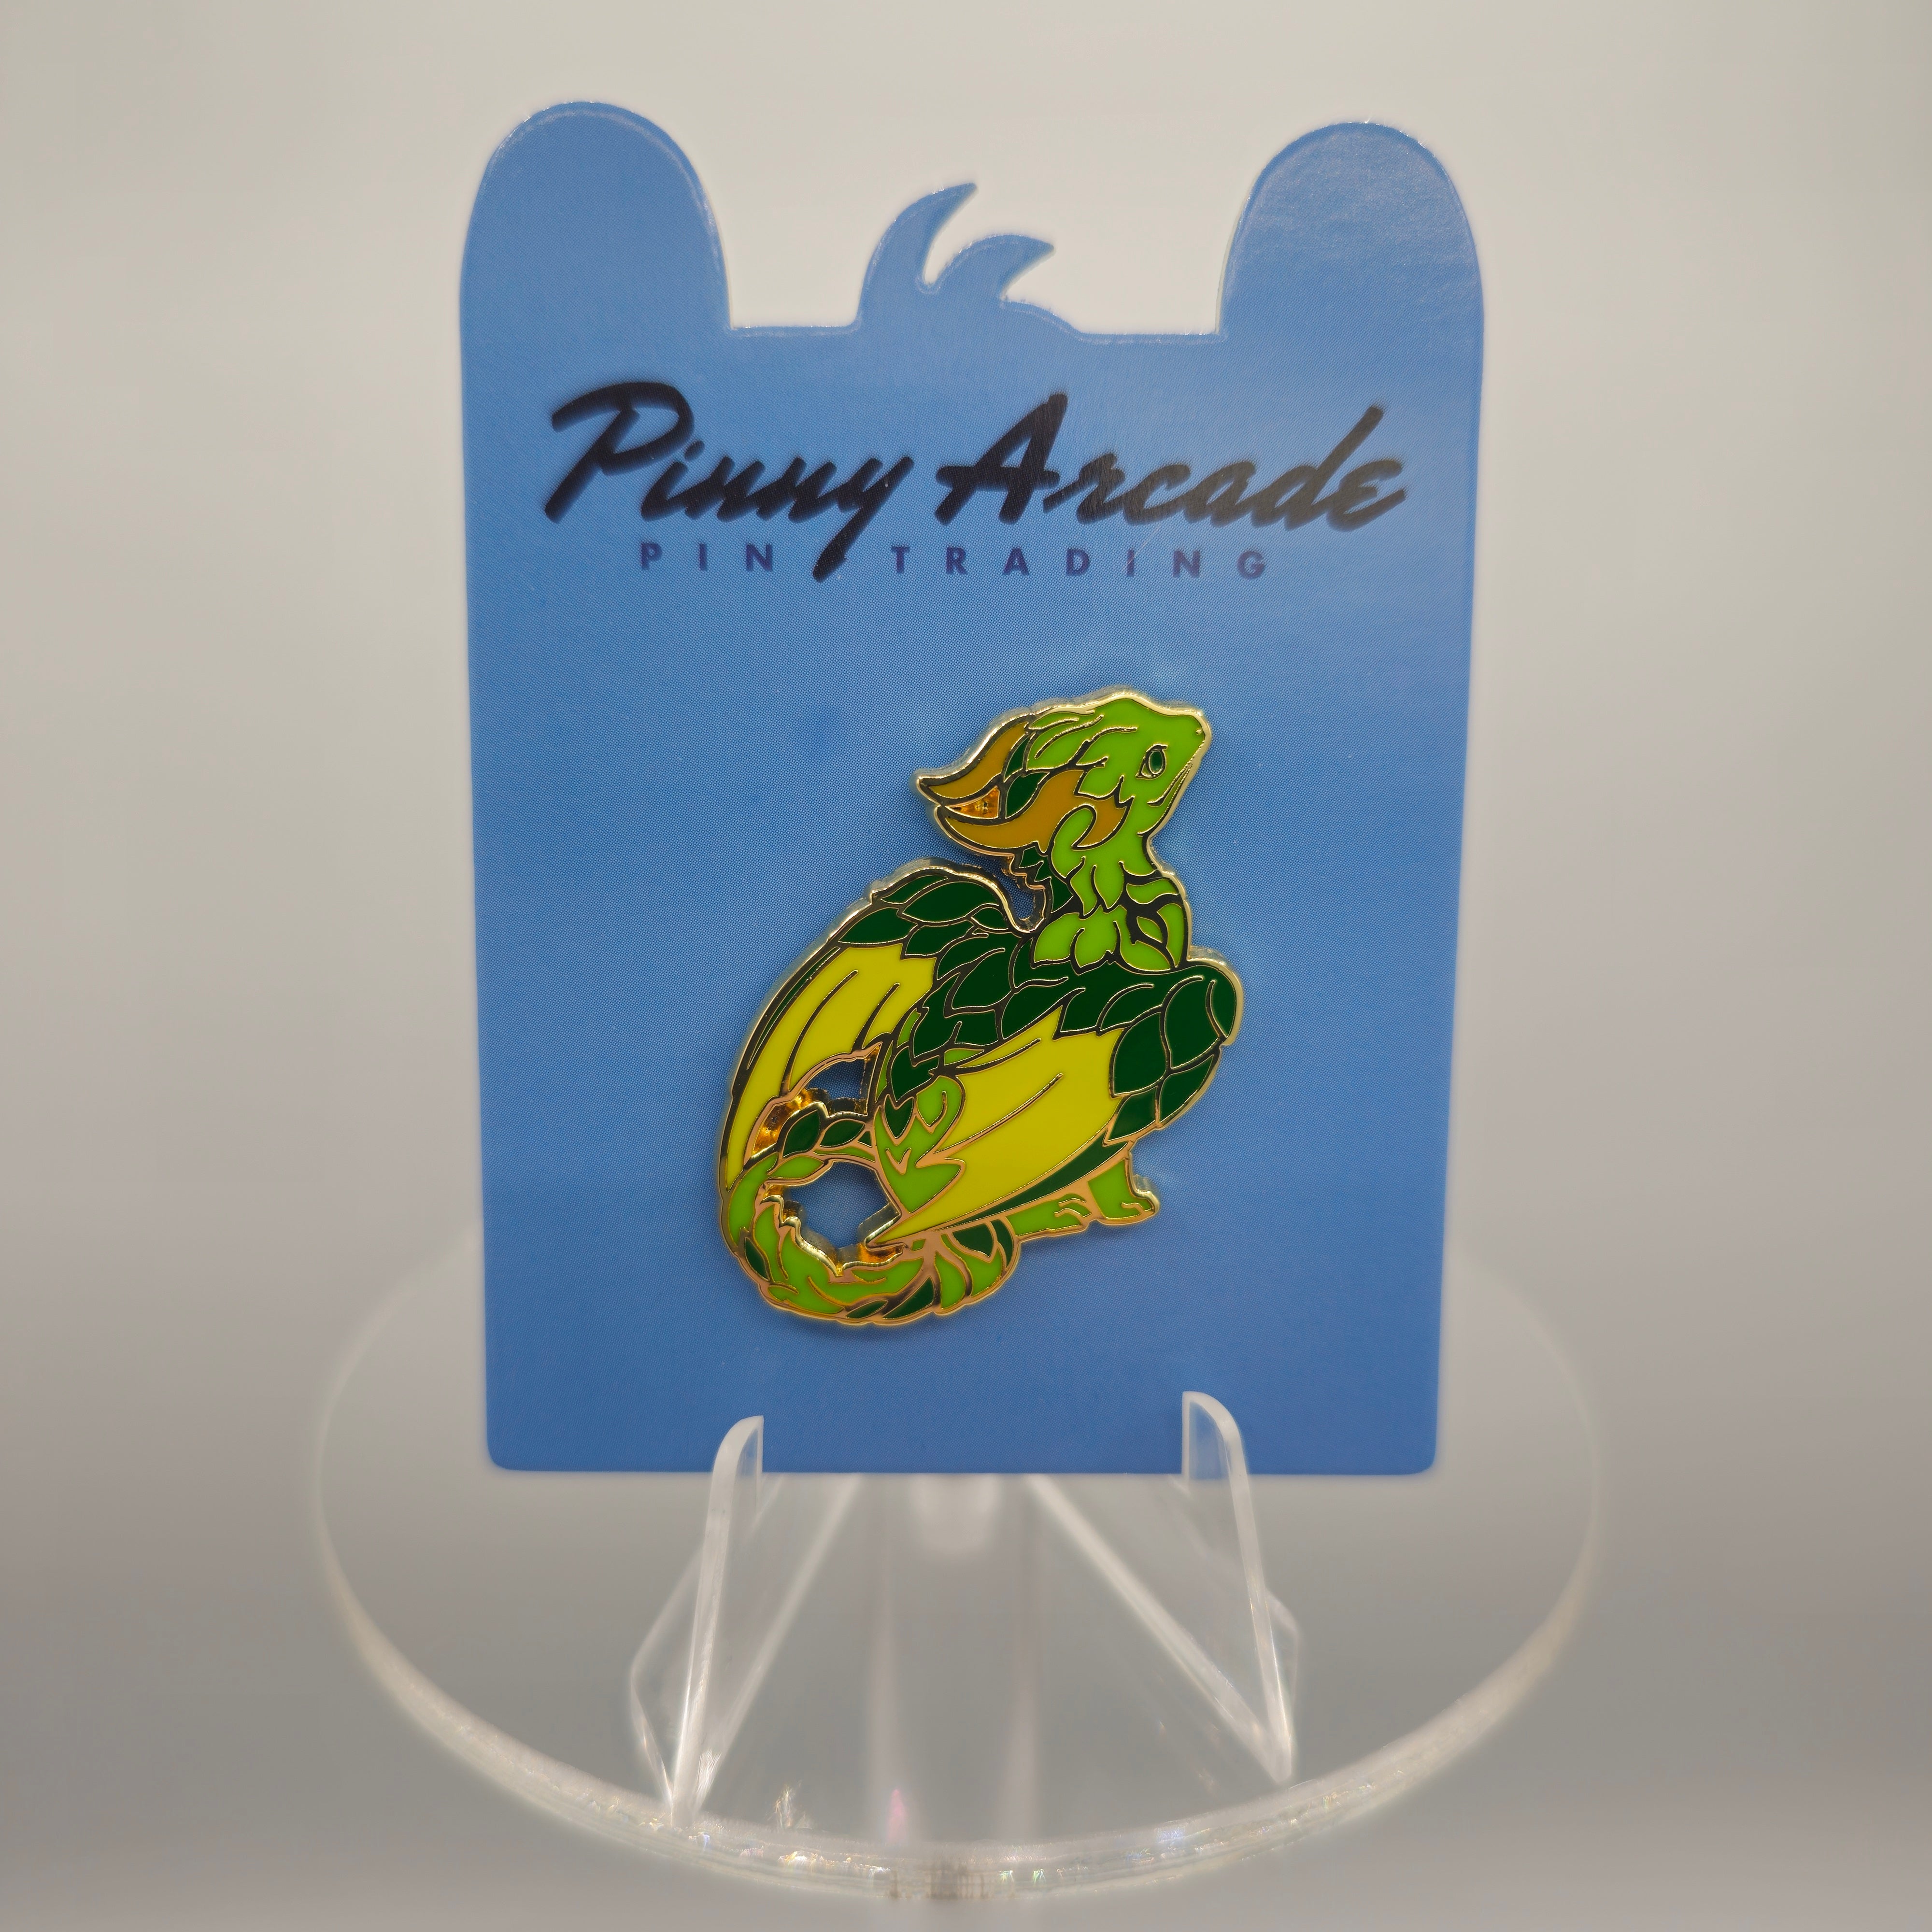 Pinny - New Release Bundle